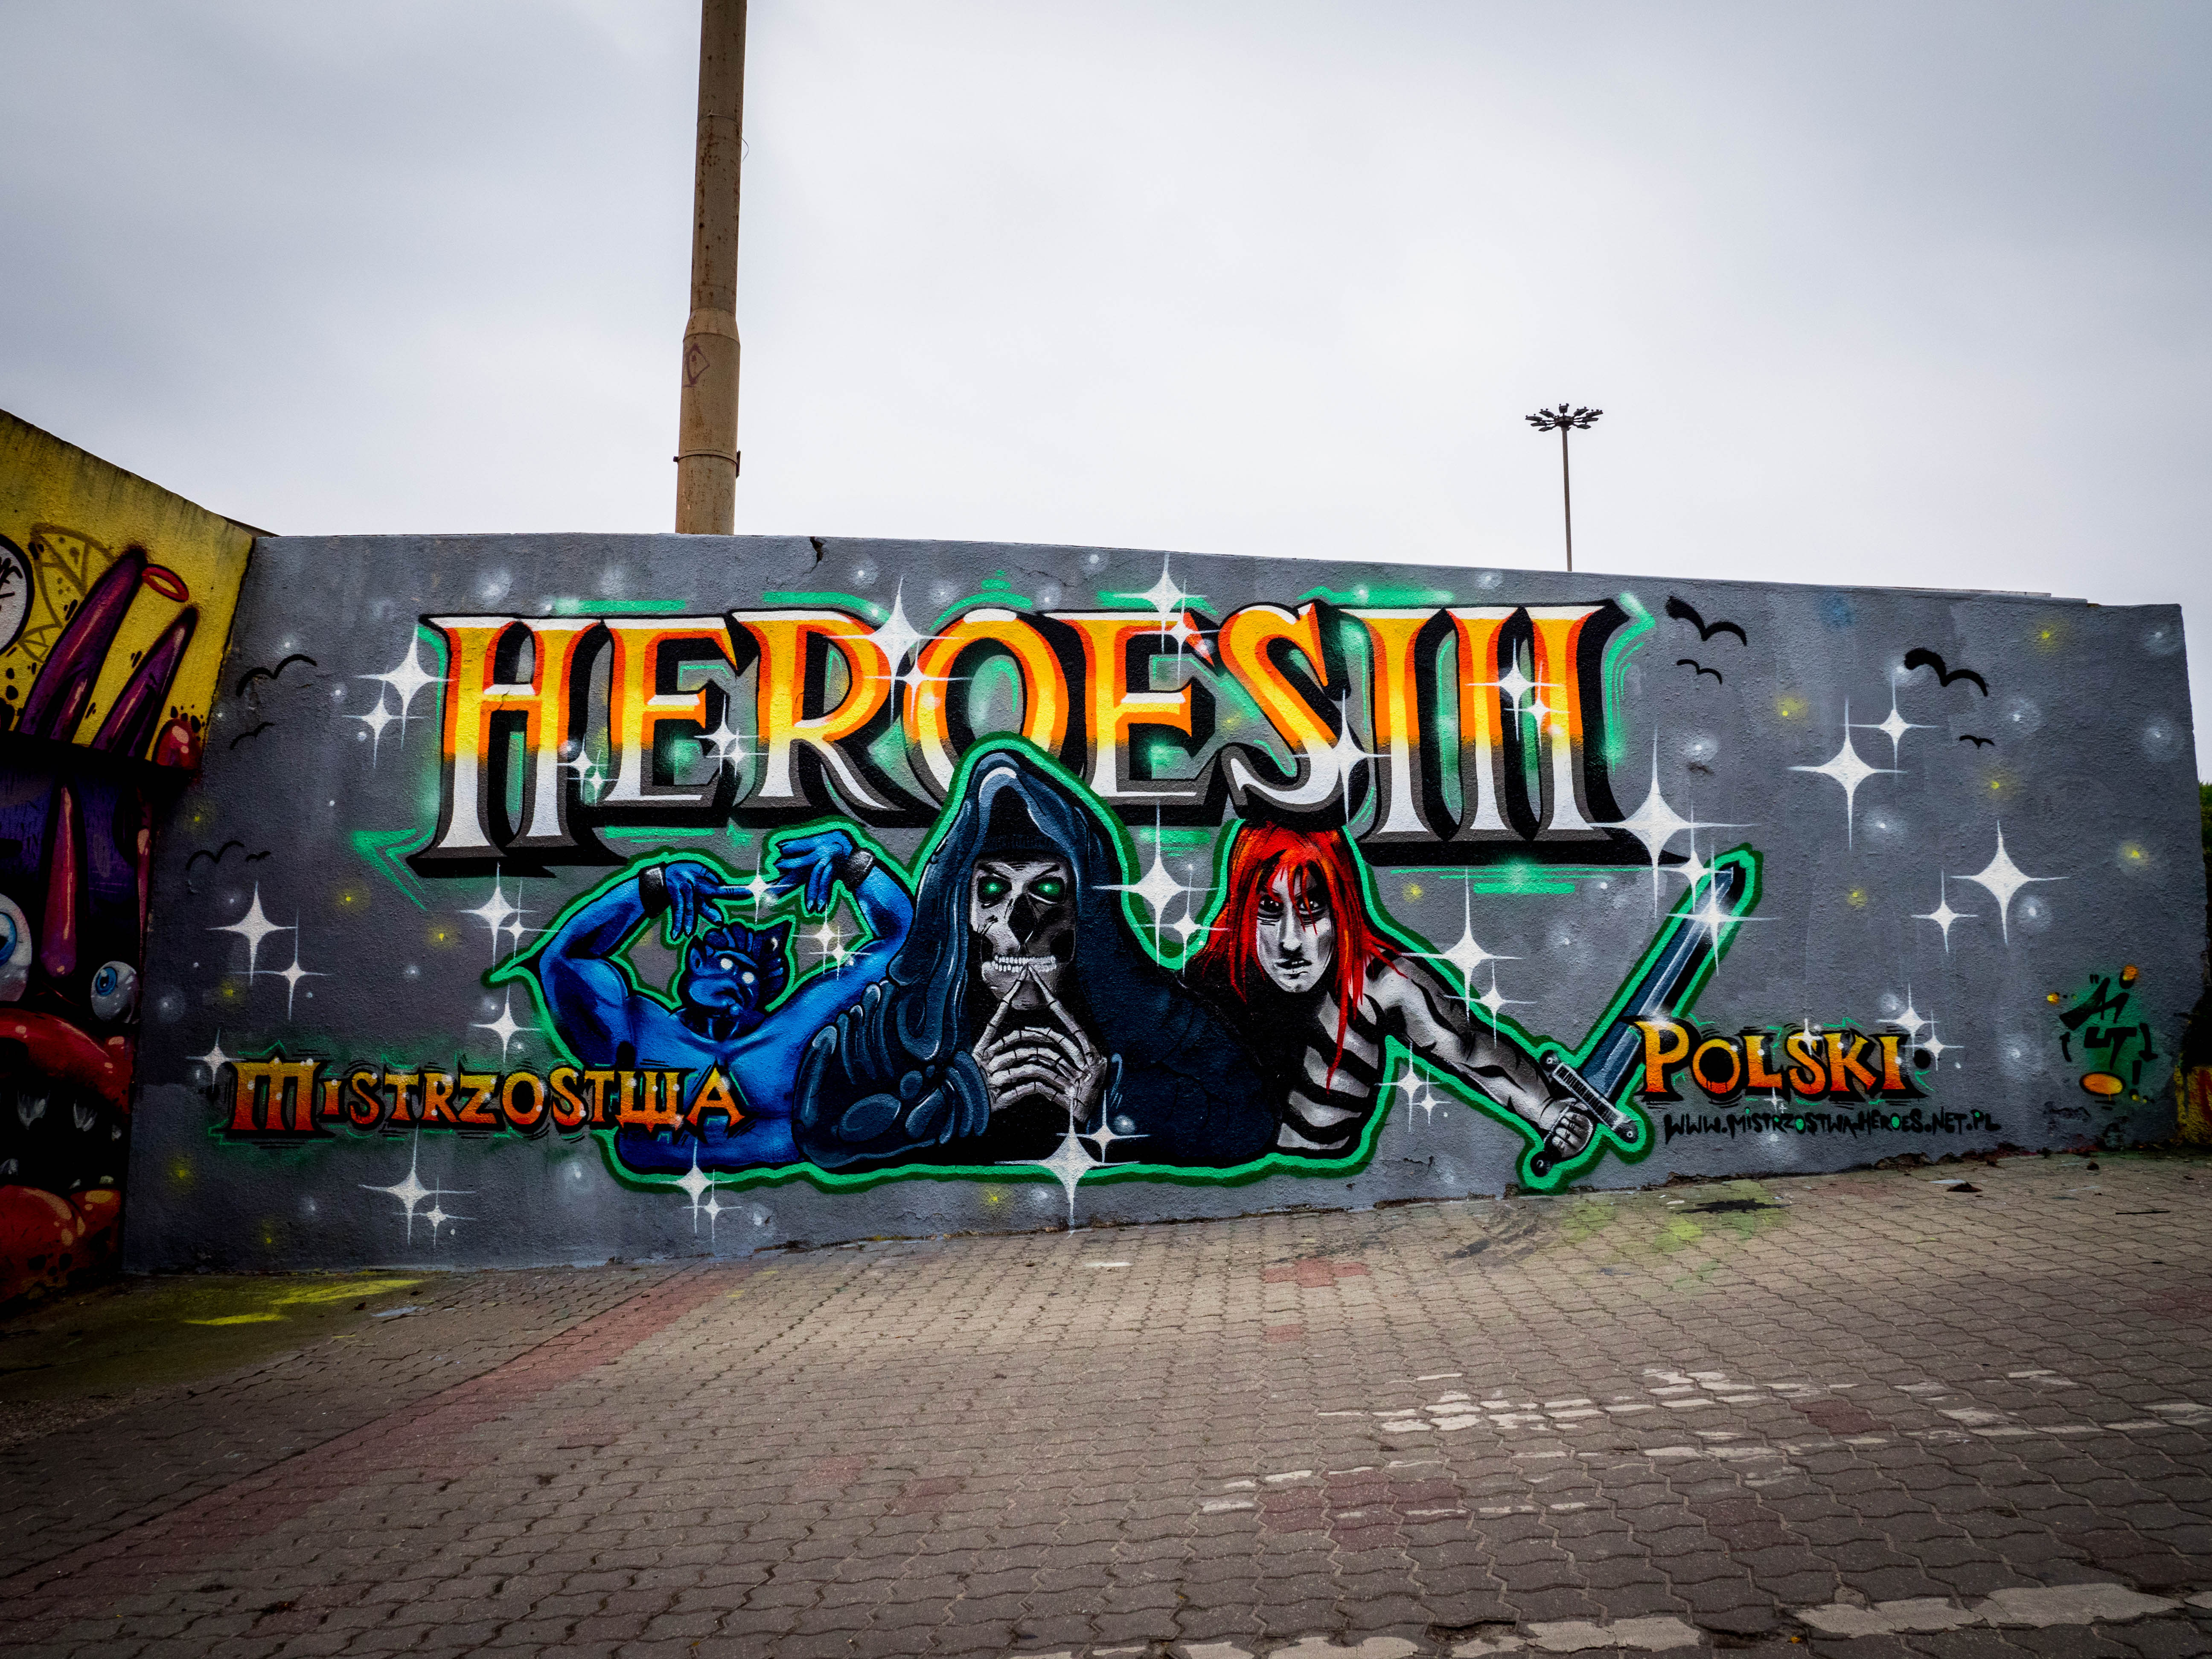 http://heroes.net.pl/uploaded/graffiti/Graffiti_2.jpg